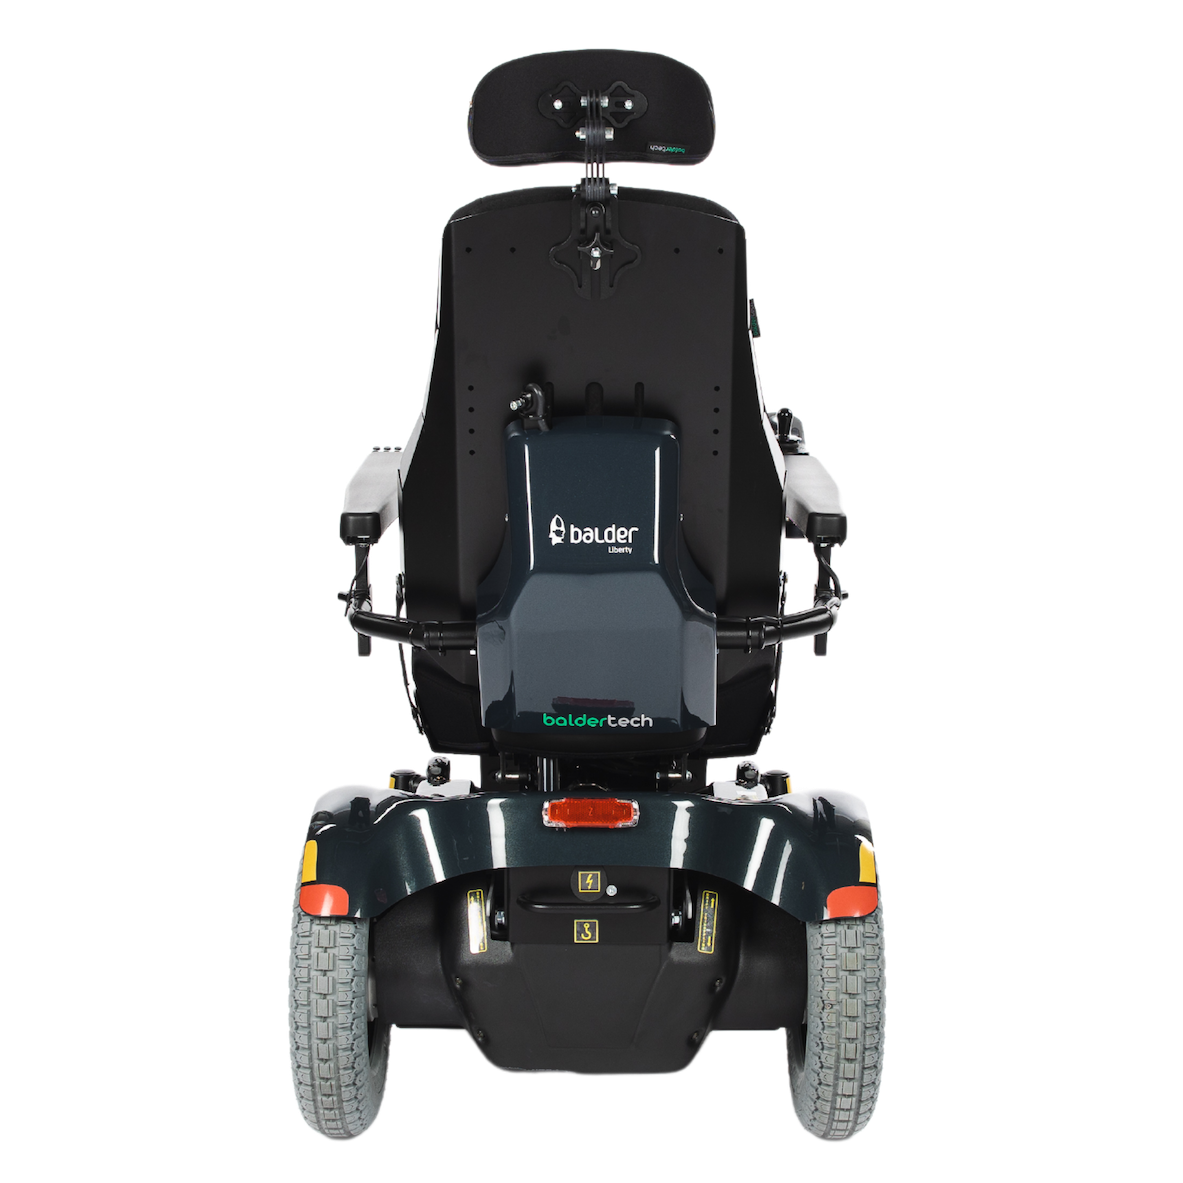 A rear view of the Balder Liberty L380 powerchair. A rear wheel drive electric wheelchair.